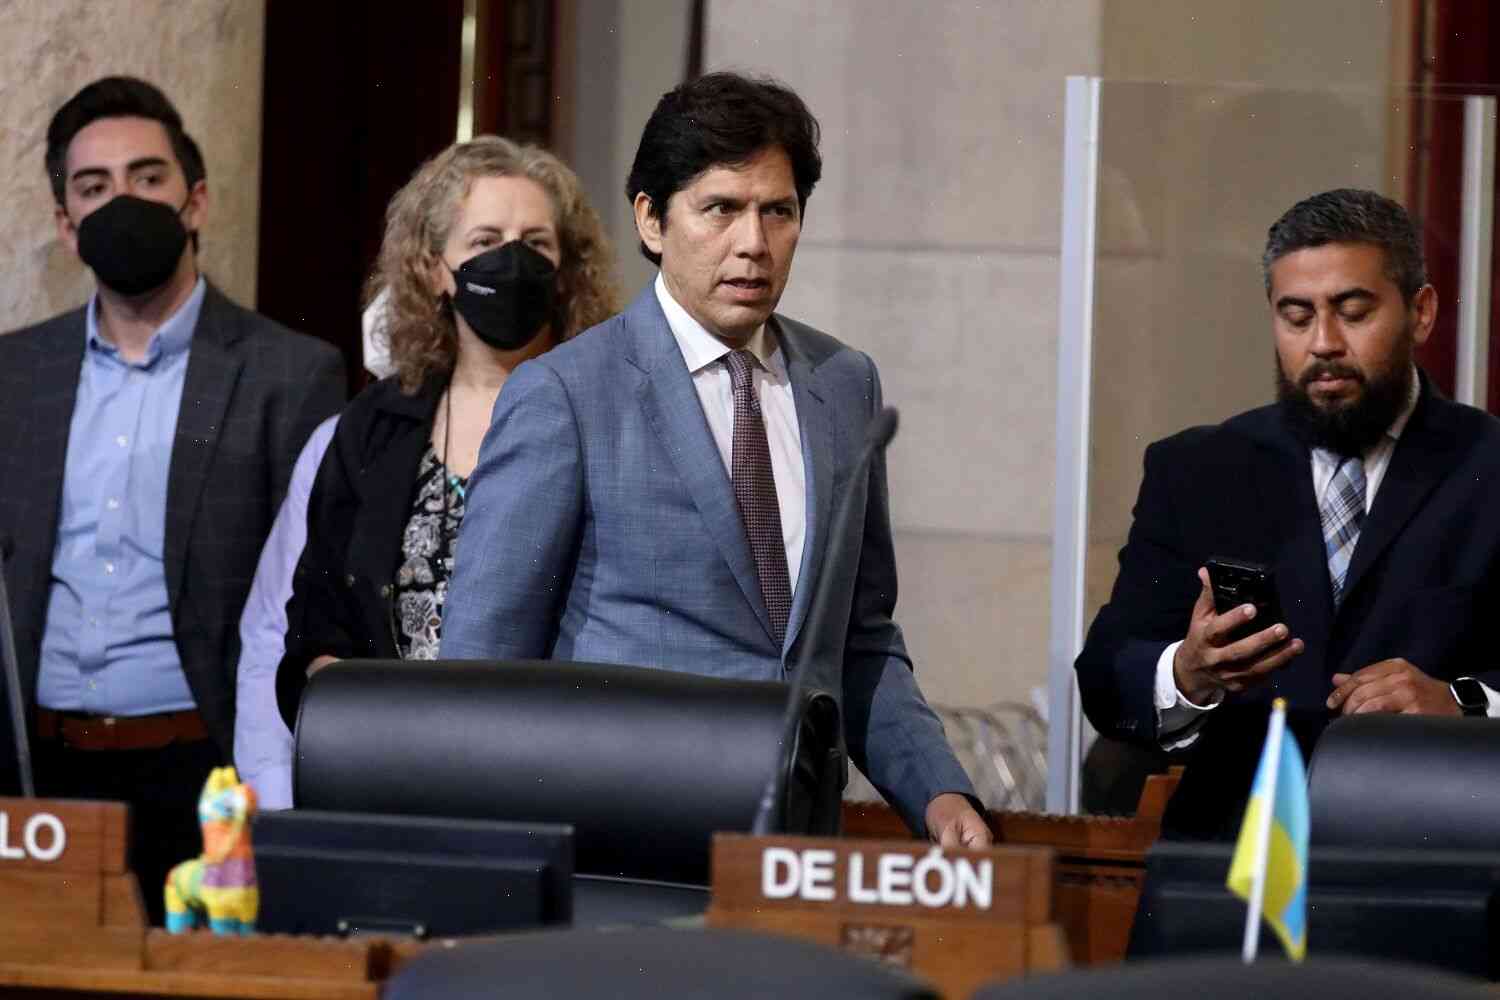 Kevin de León, the U.S. congressman, is a racial slur — and he’s not a racist